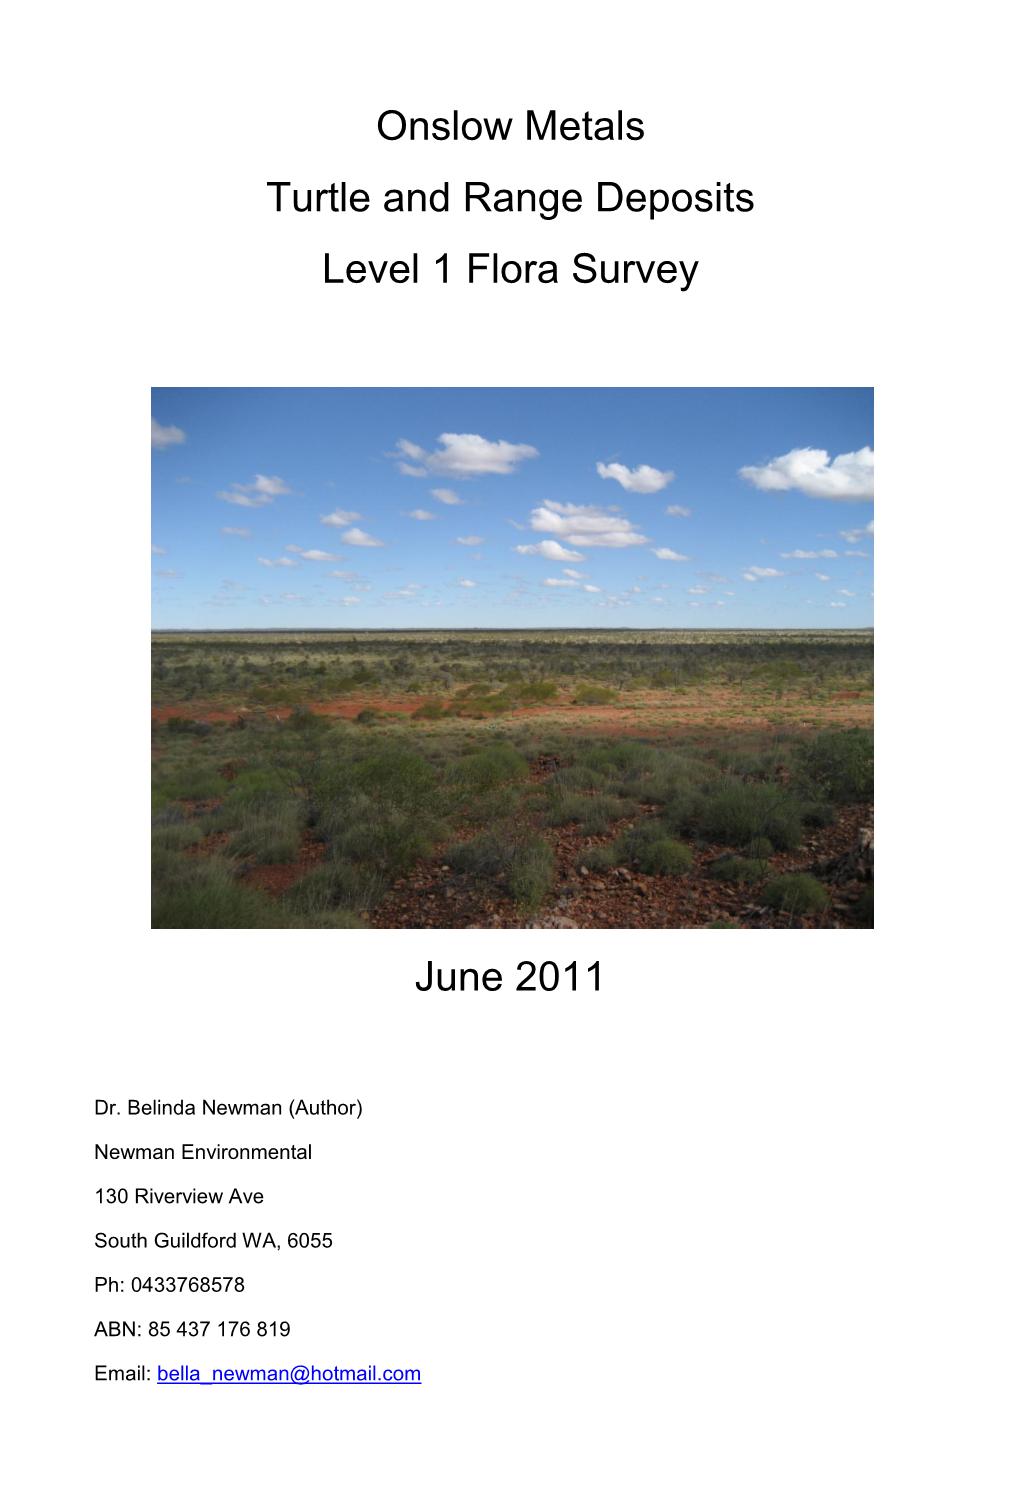 Onslow Metals Turtle and Range Deposits Level 1 Flora Survey June